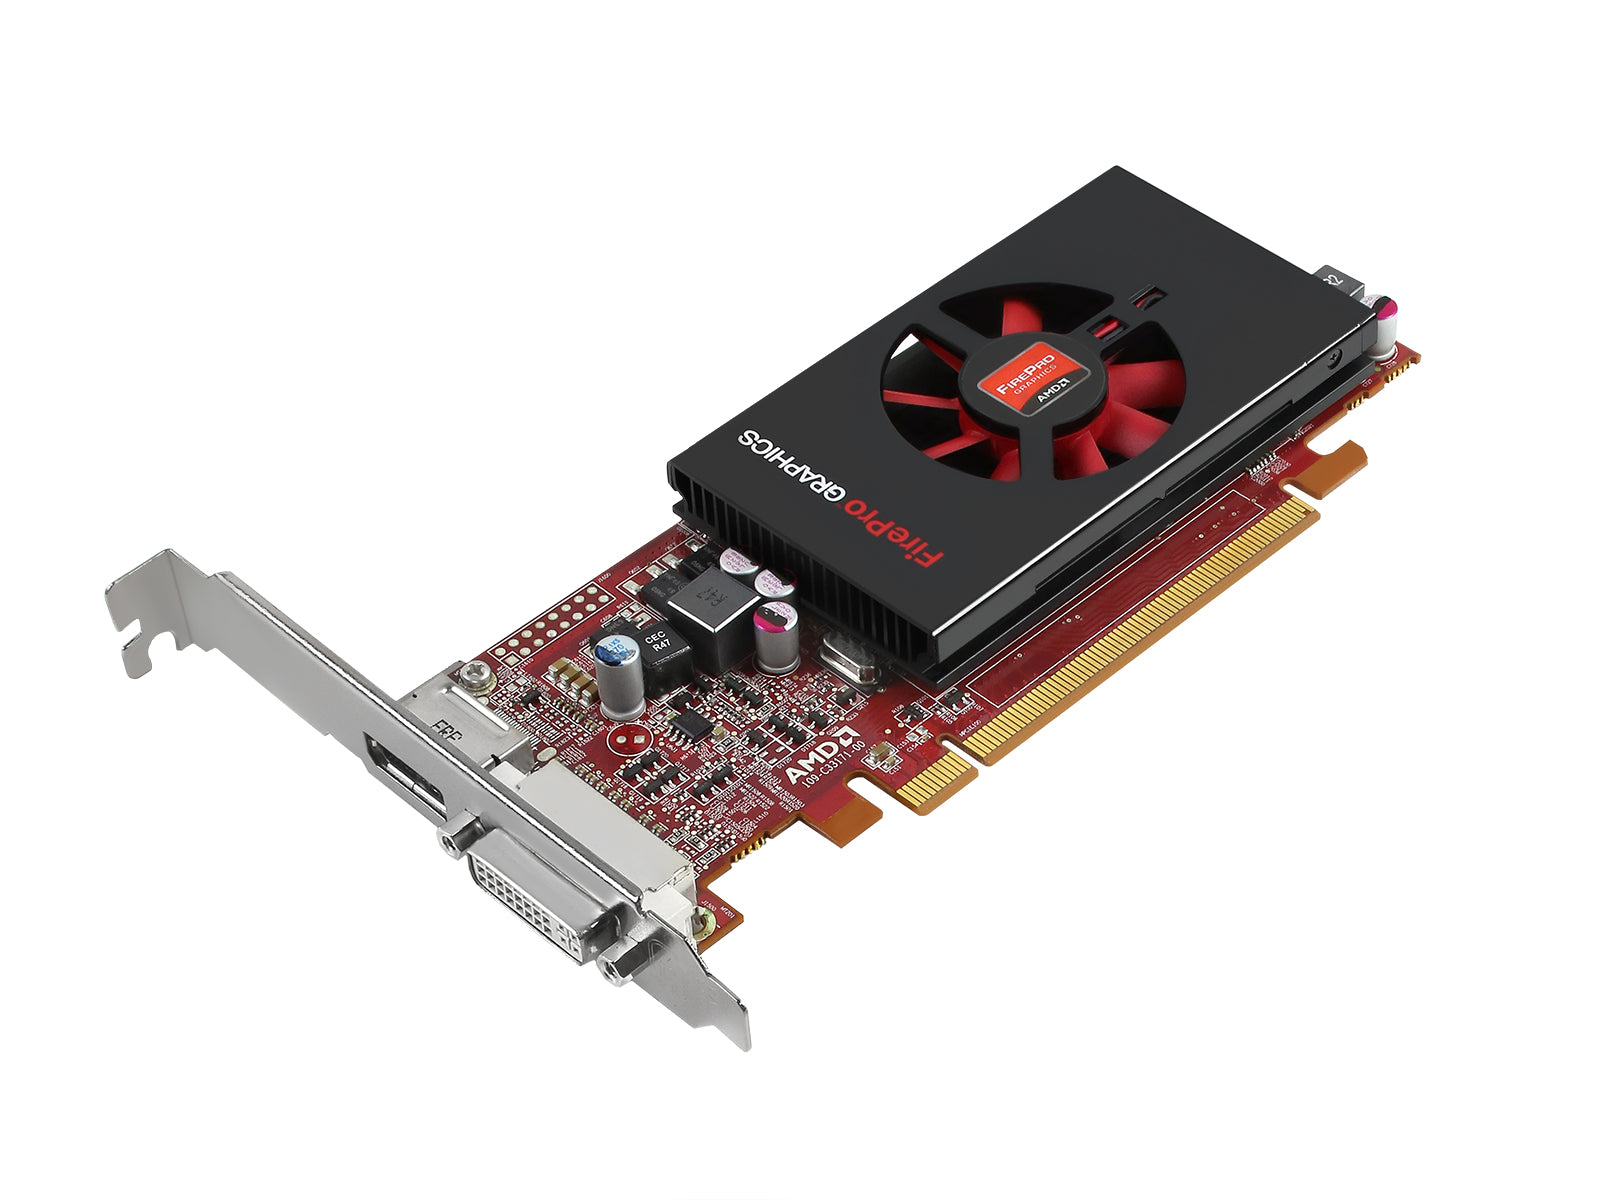 Barco MXRT-2500 1GB PCIe グラフィック カード (K9306035) Monitors.com